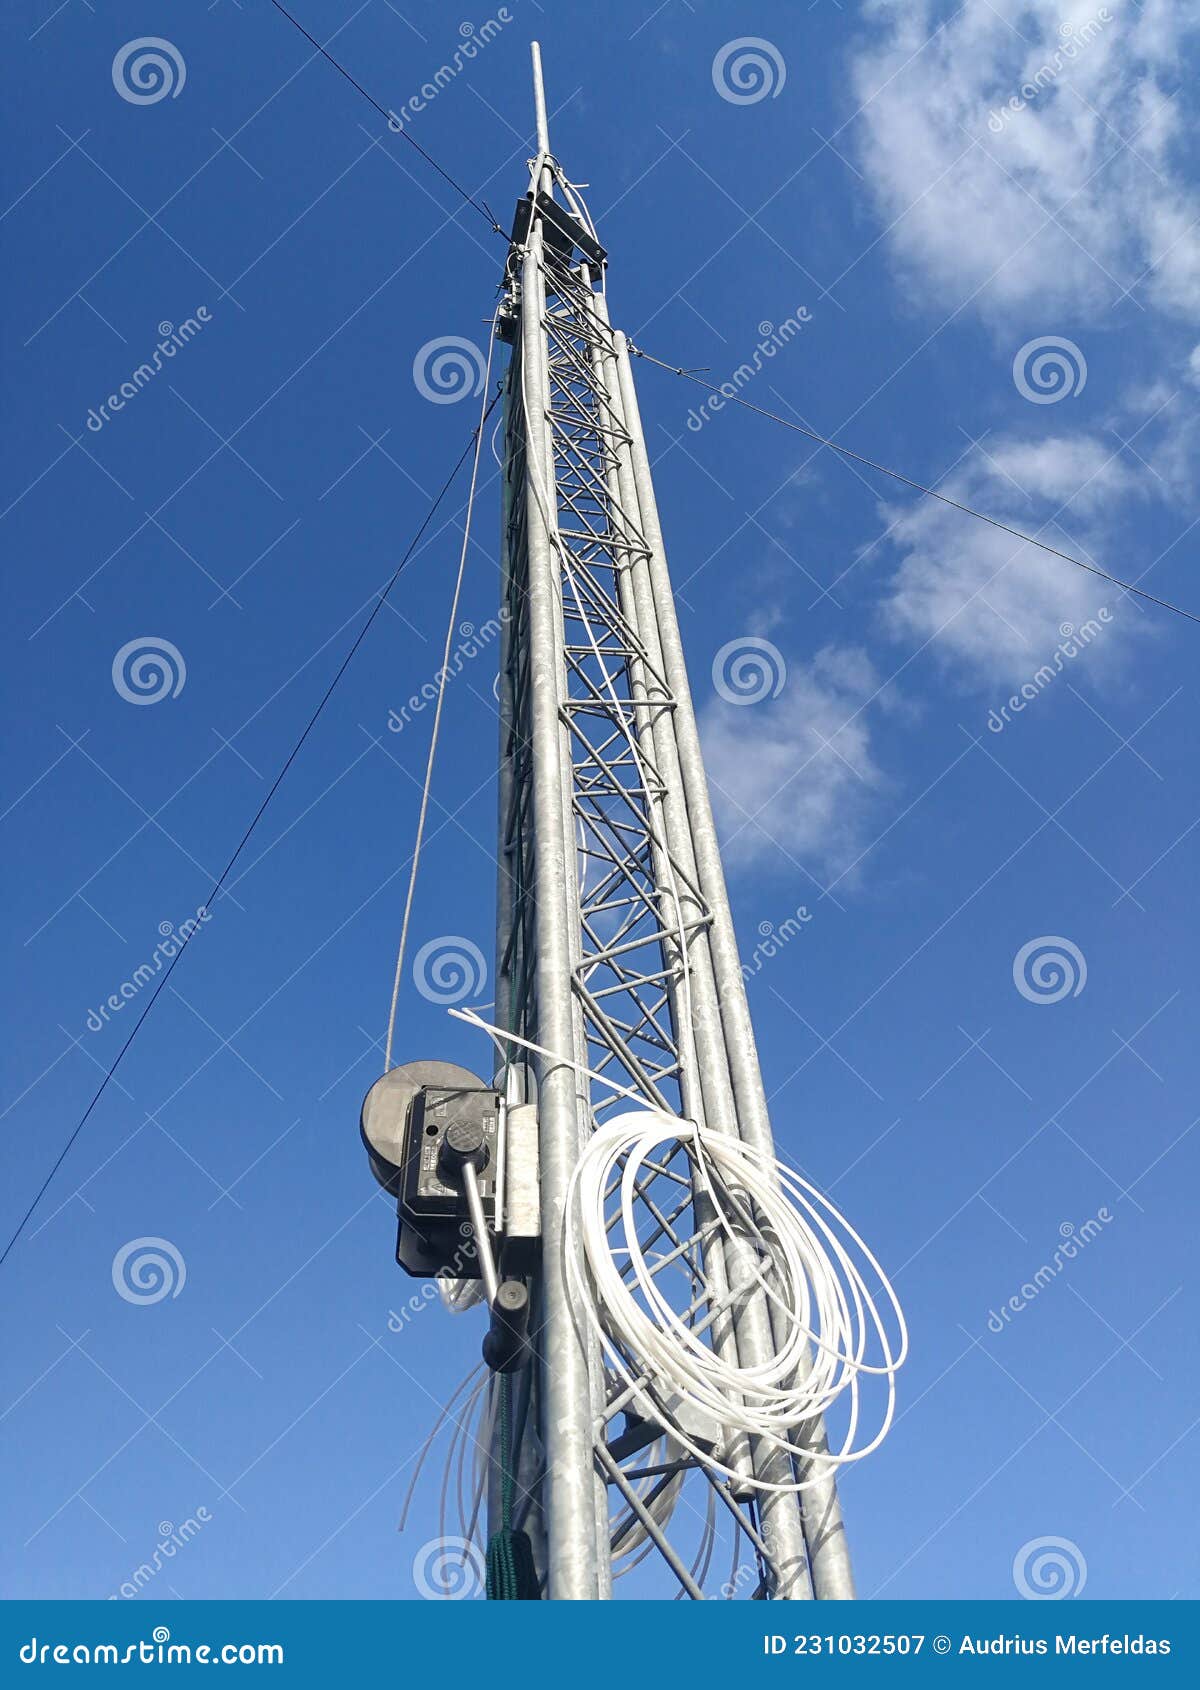 Amateur Radio Tower Stock Photos image